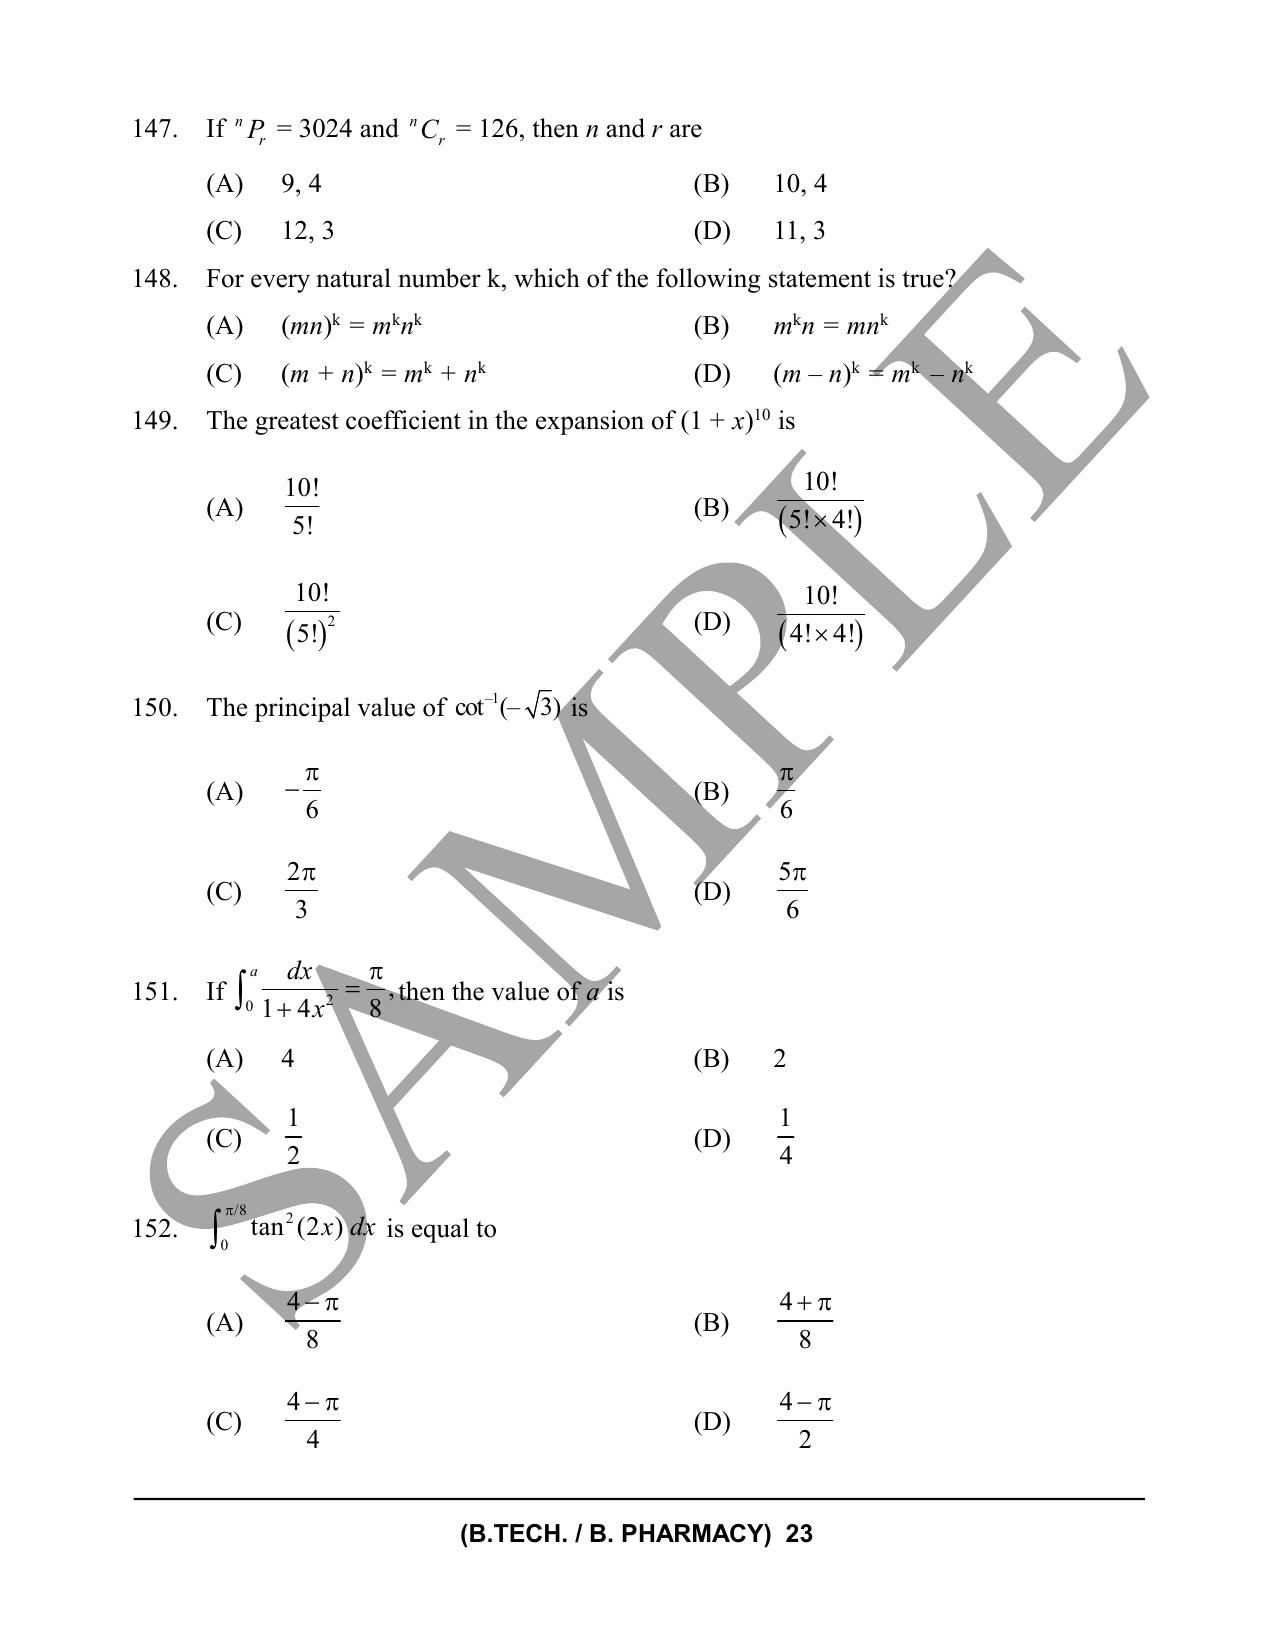 HPCET B. Tech. and B. Pharm. 2023 Sample Paper - Page 23